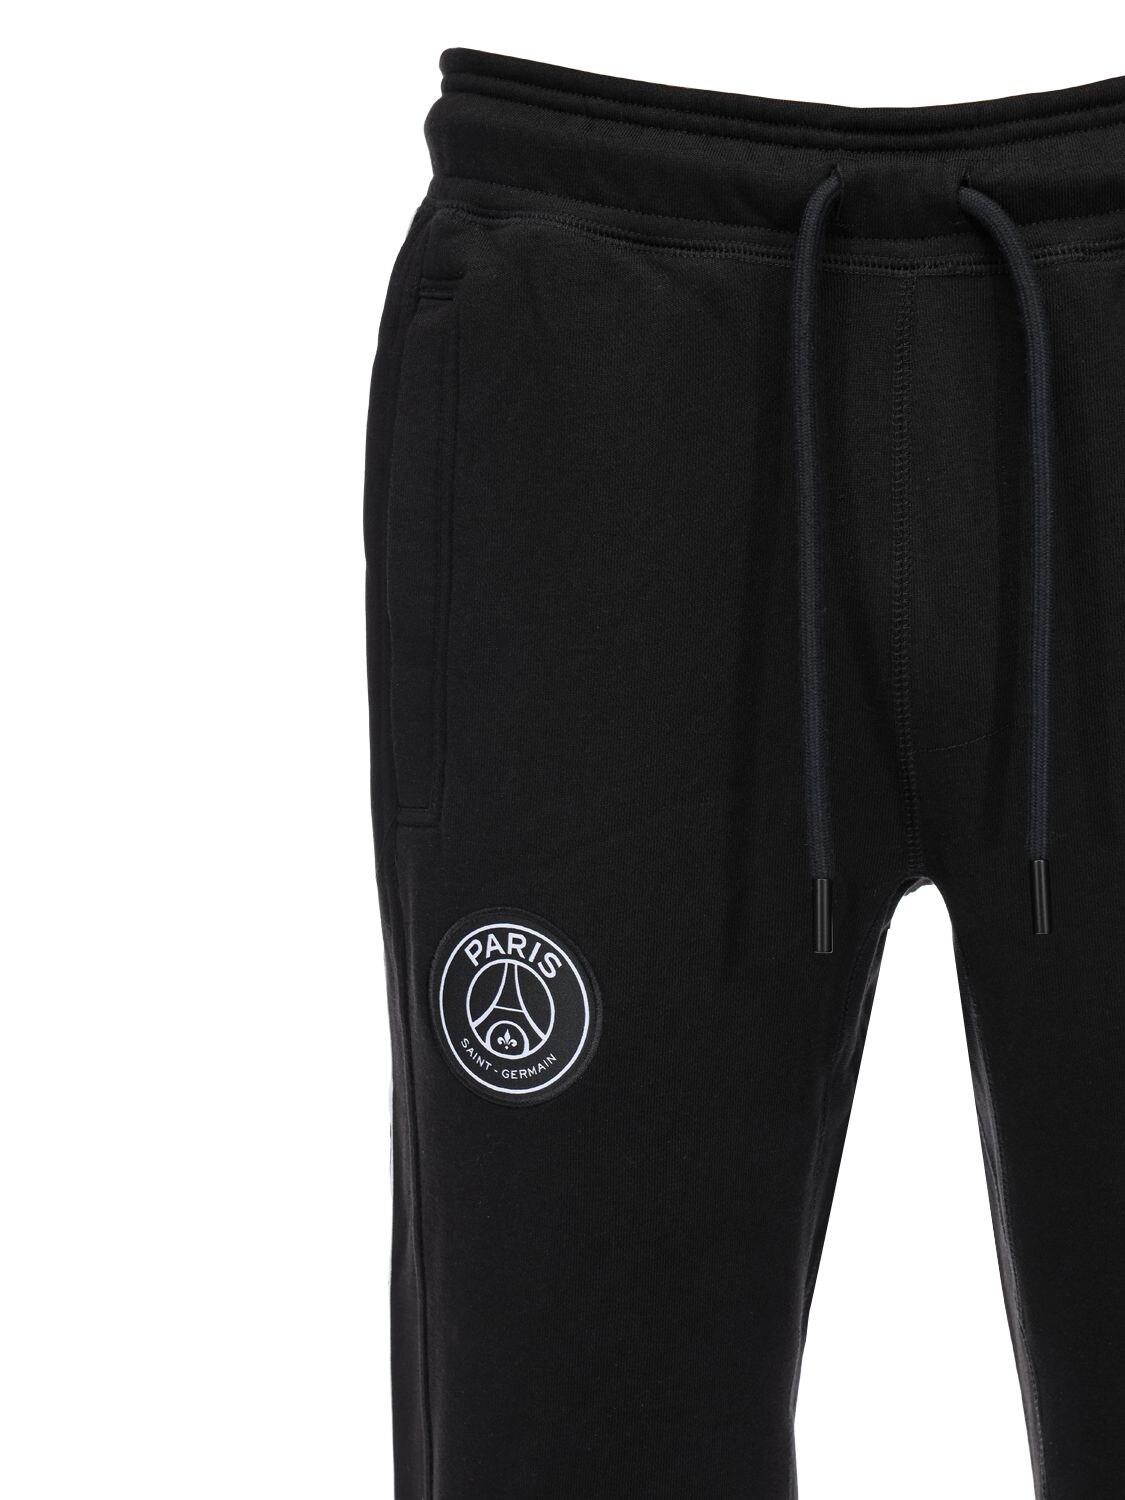 Nike Psg Cotton Blend Sweatpants in Black for Men - Lyst